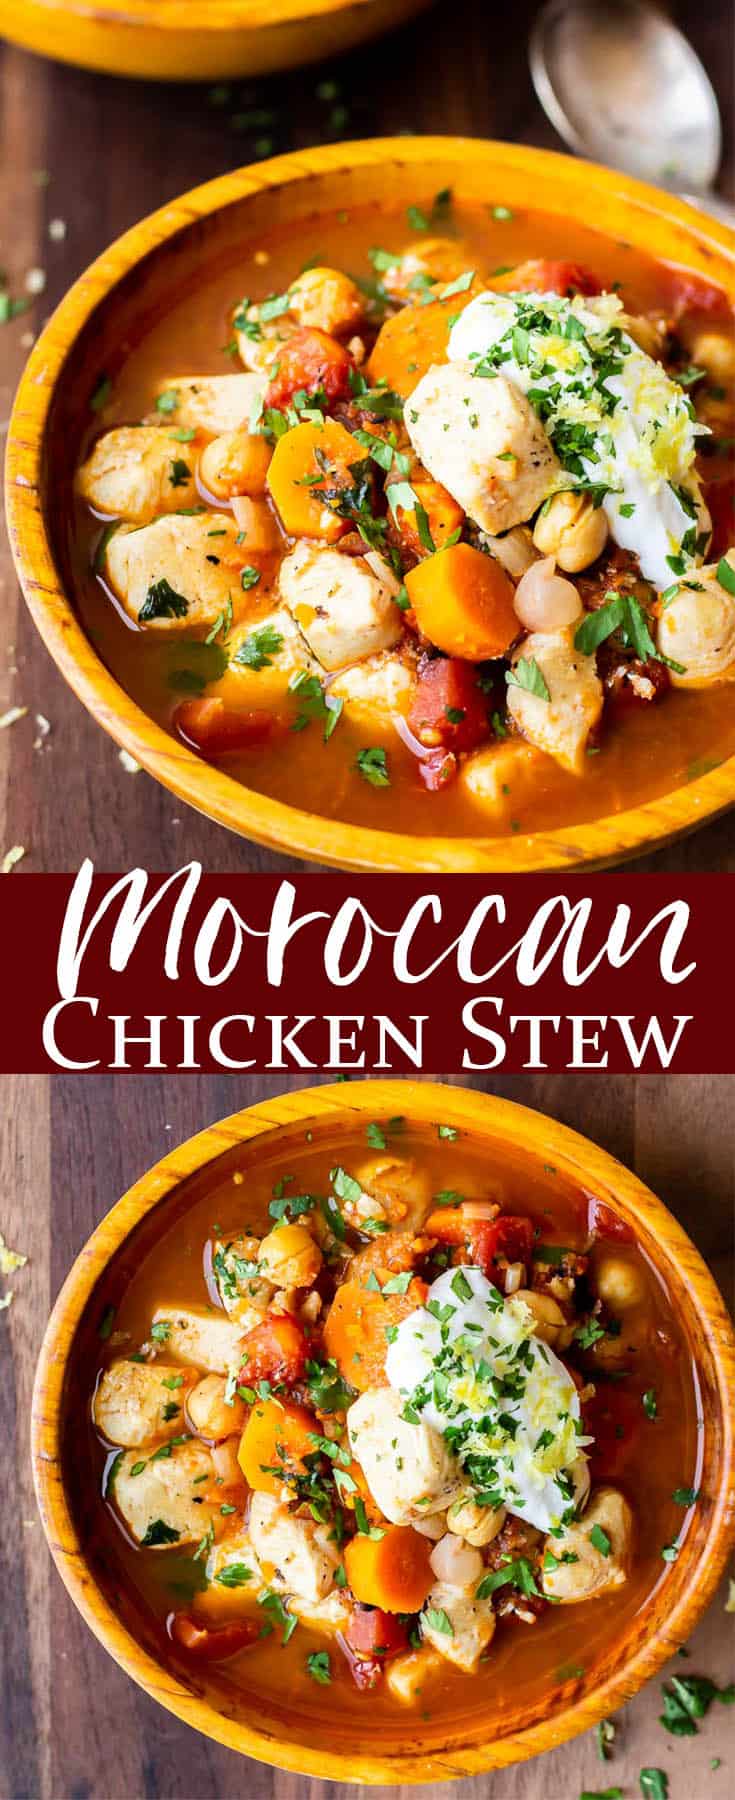 Easy 30 MINUTE Moroccan Chicken Stew - Delicious Little Bites